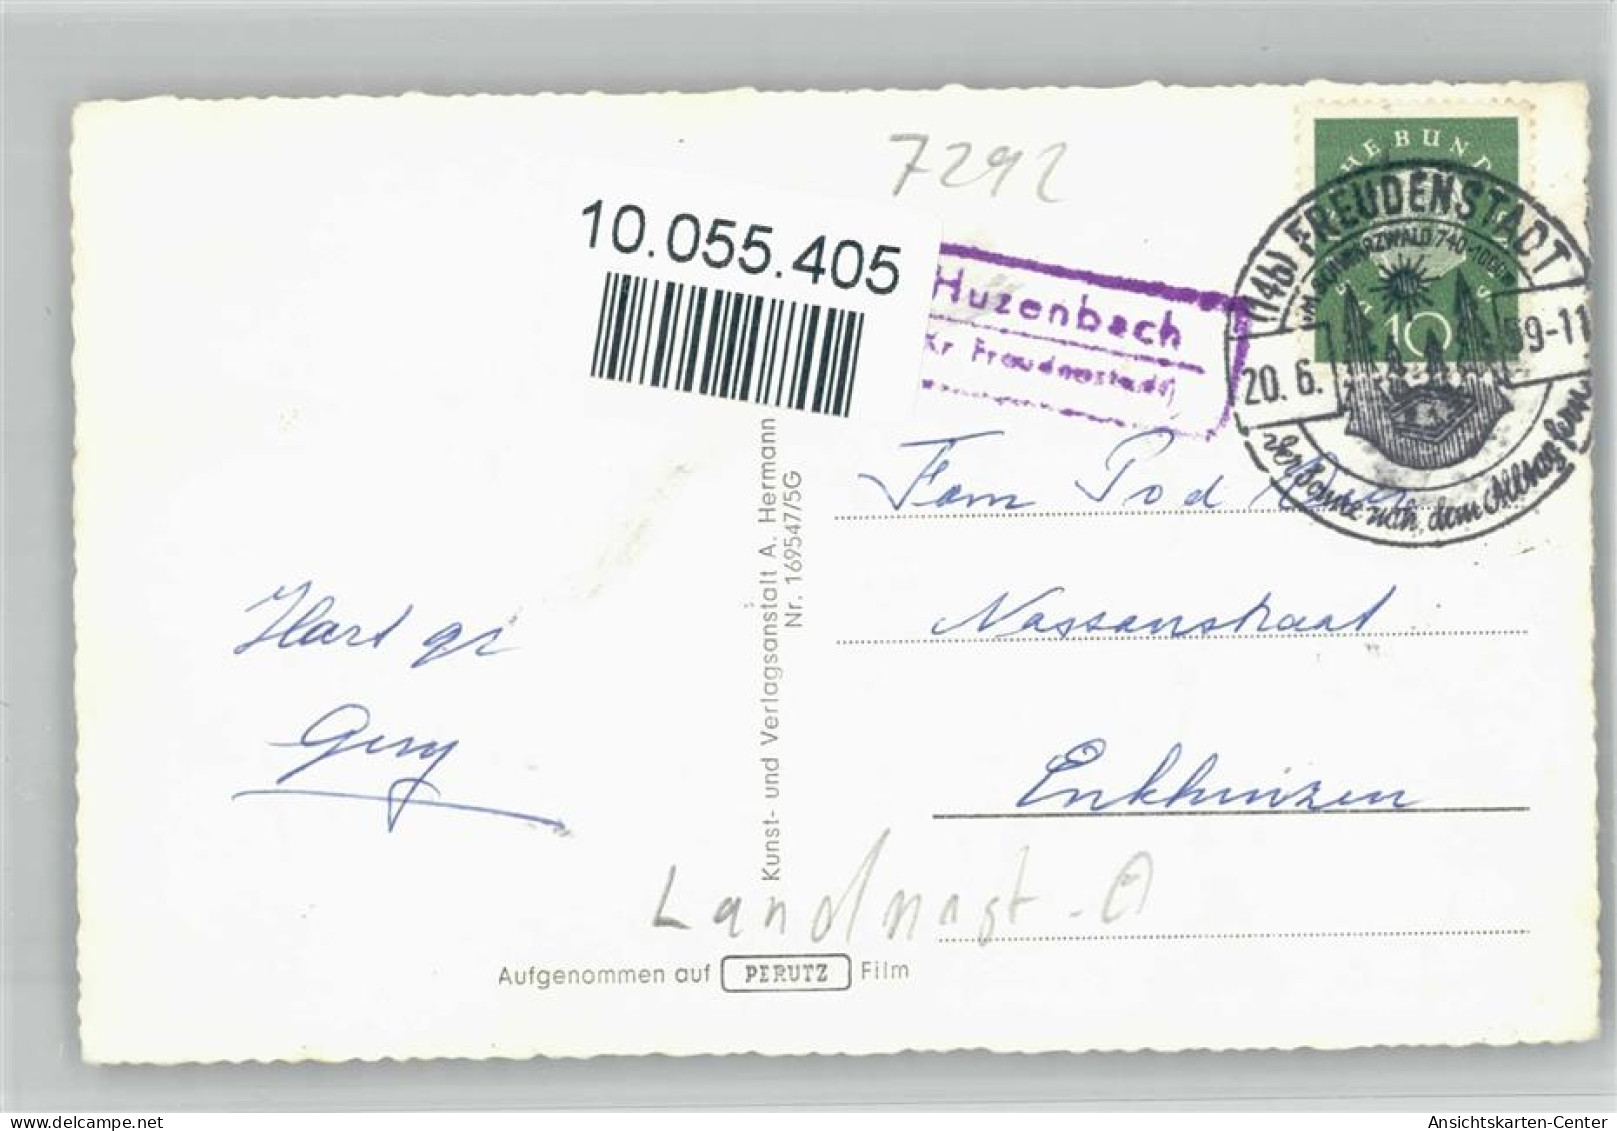 10055405 - Huzenbach - Baiersbronn